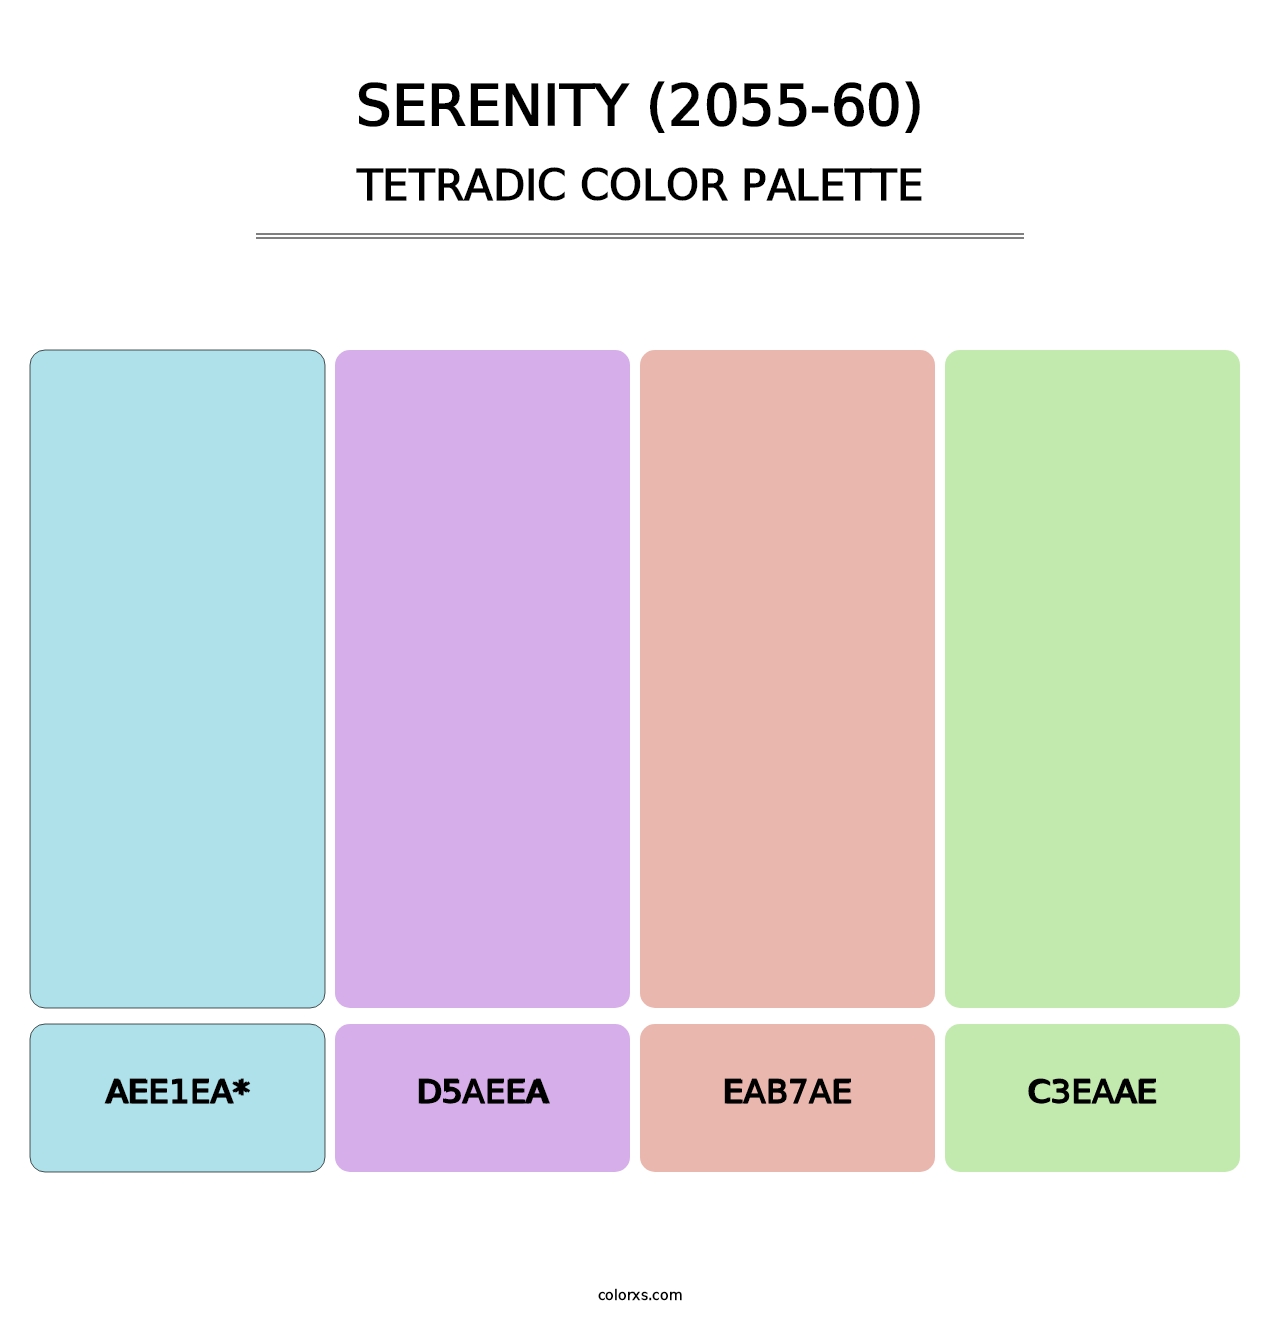 Serenity (2055-60) - Tetradic Color Palette